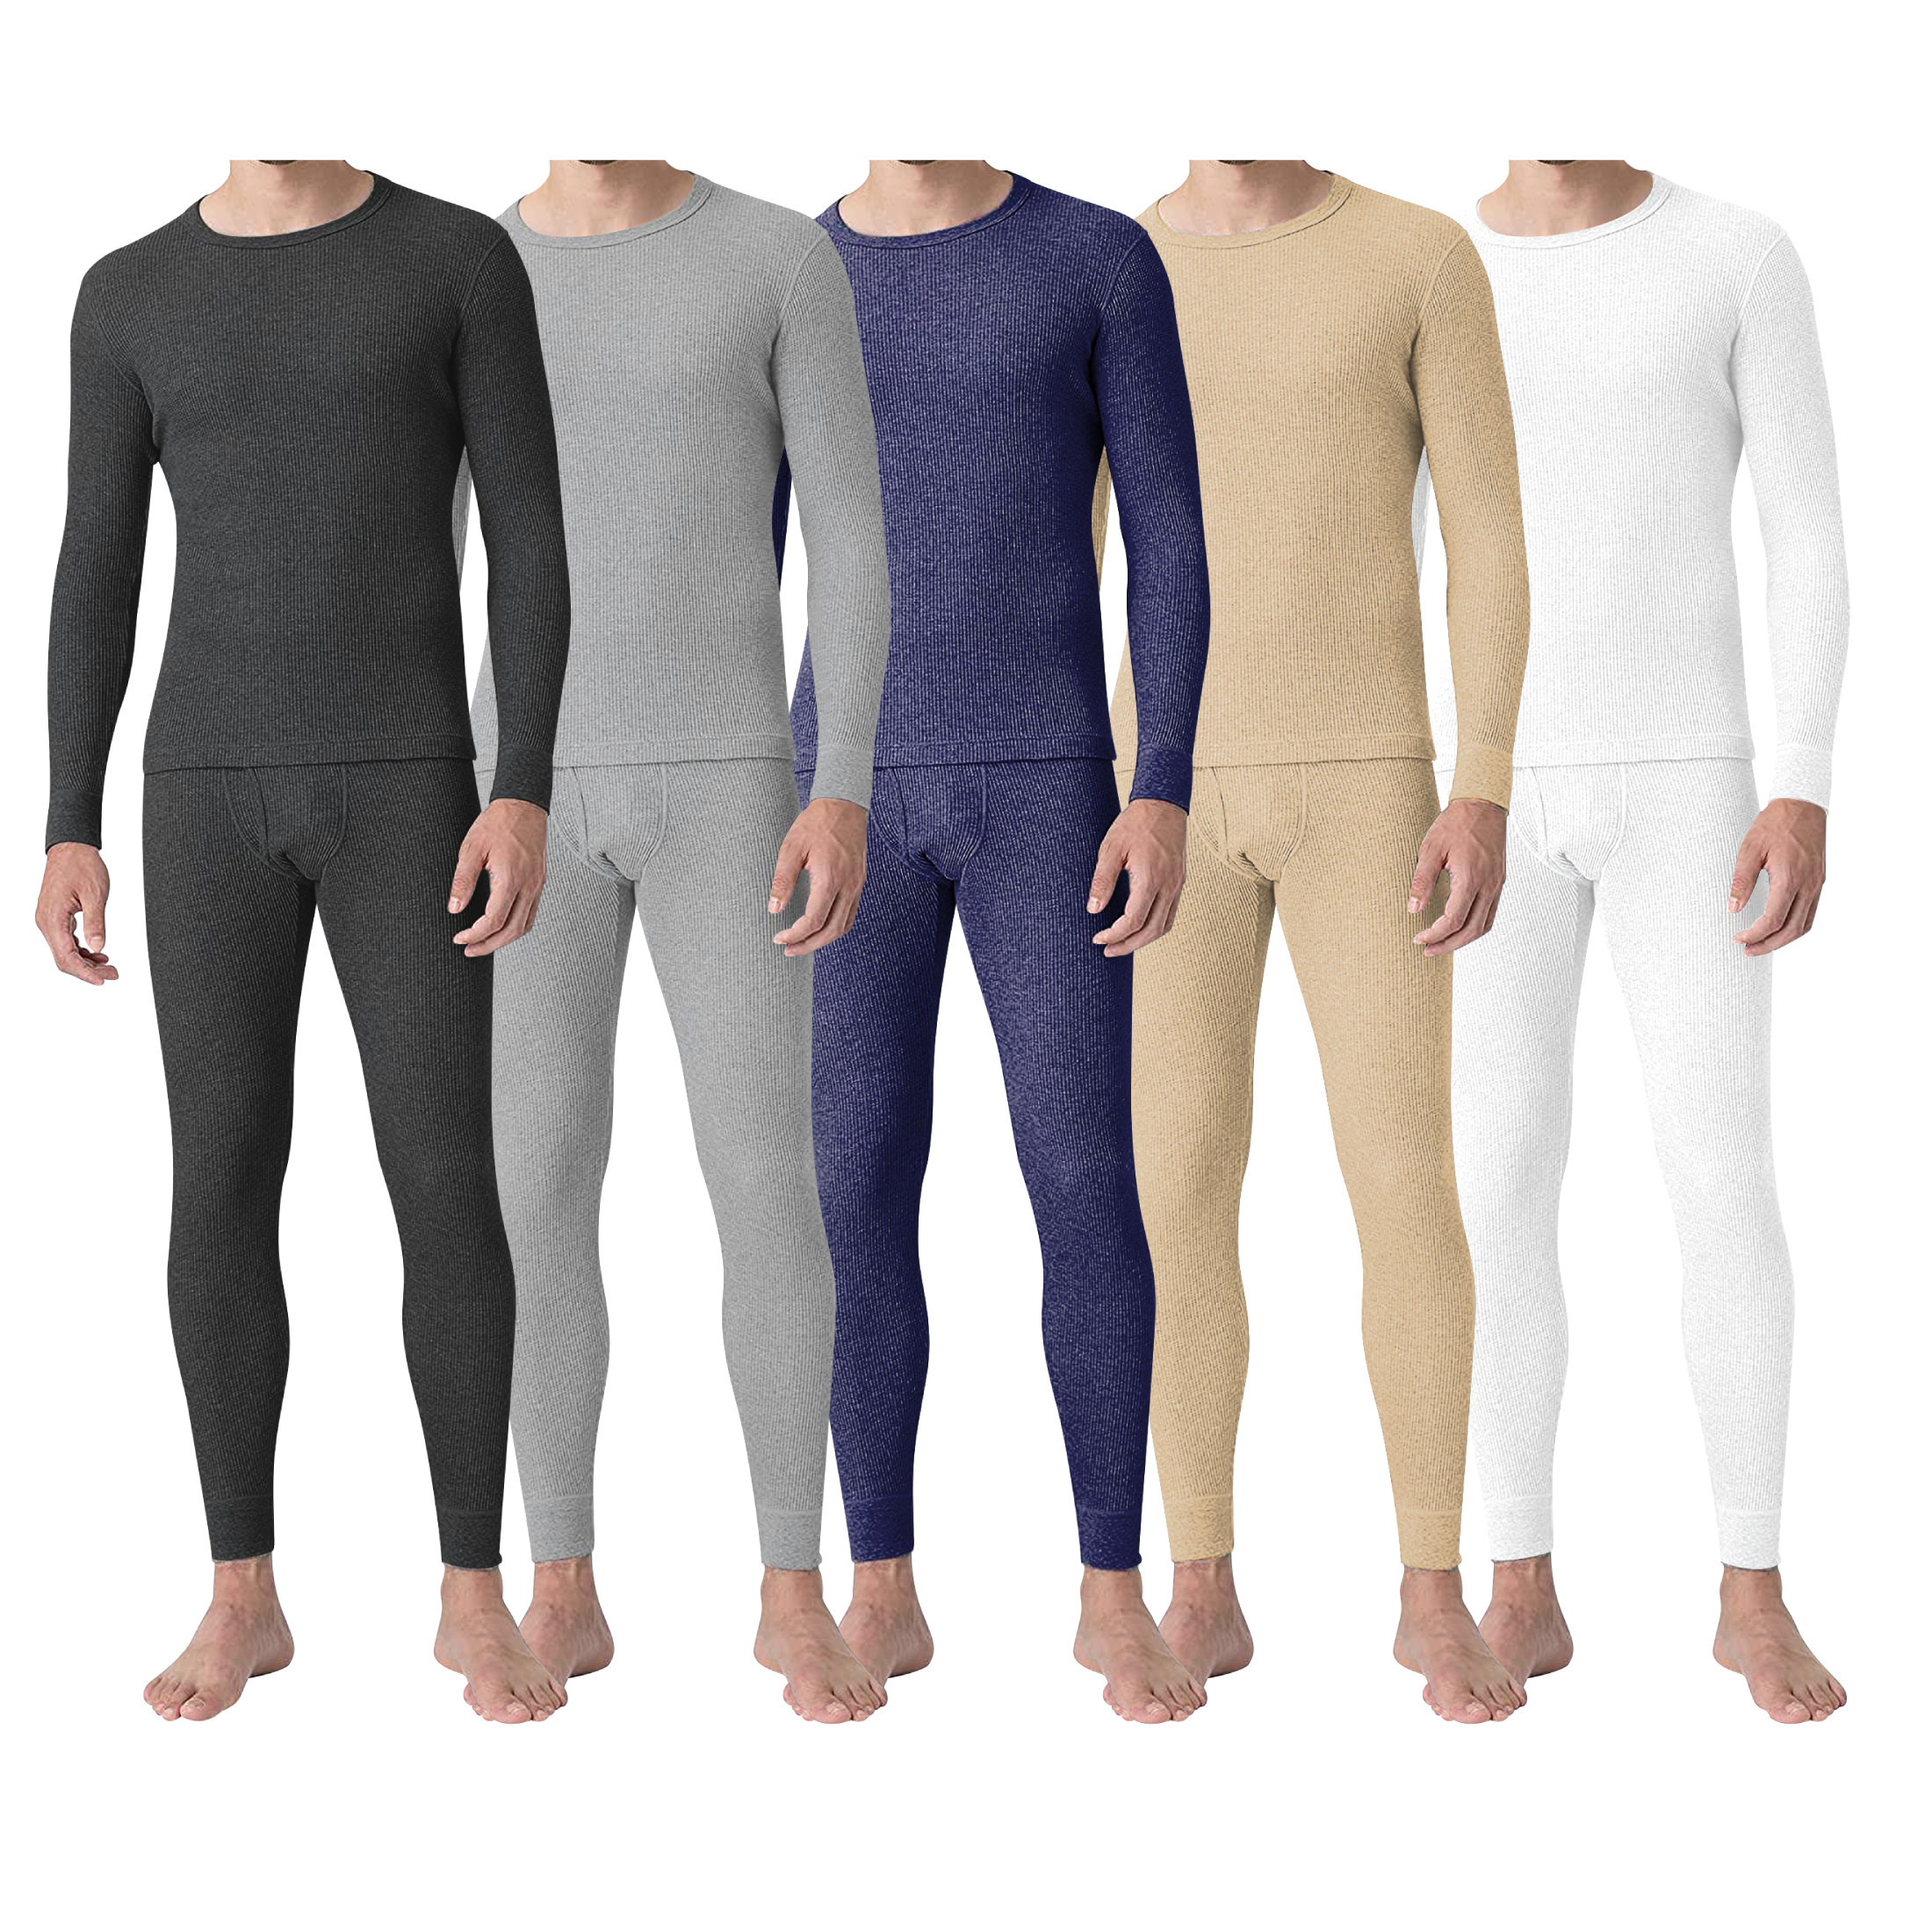 2-Piece: Men's Super Soft Cotton Waffle Knit Winter Thermal Underwear Set - Charcoal, Medium